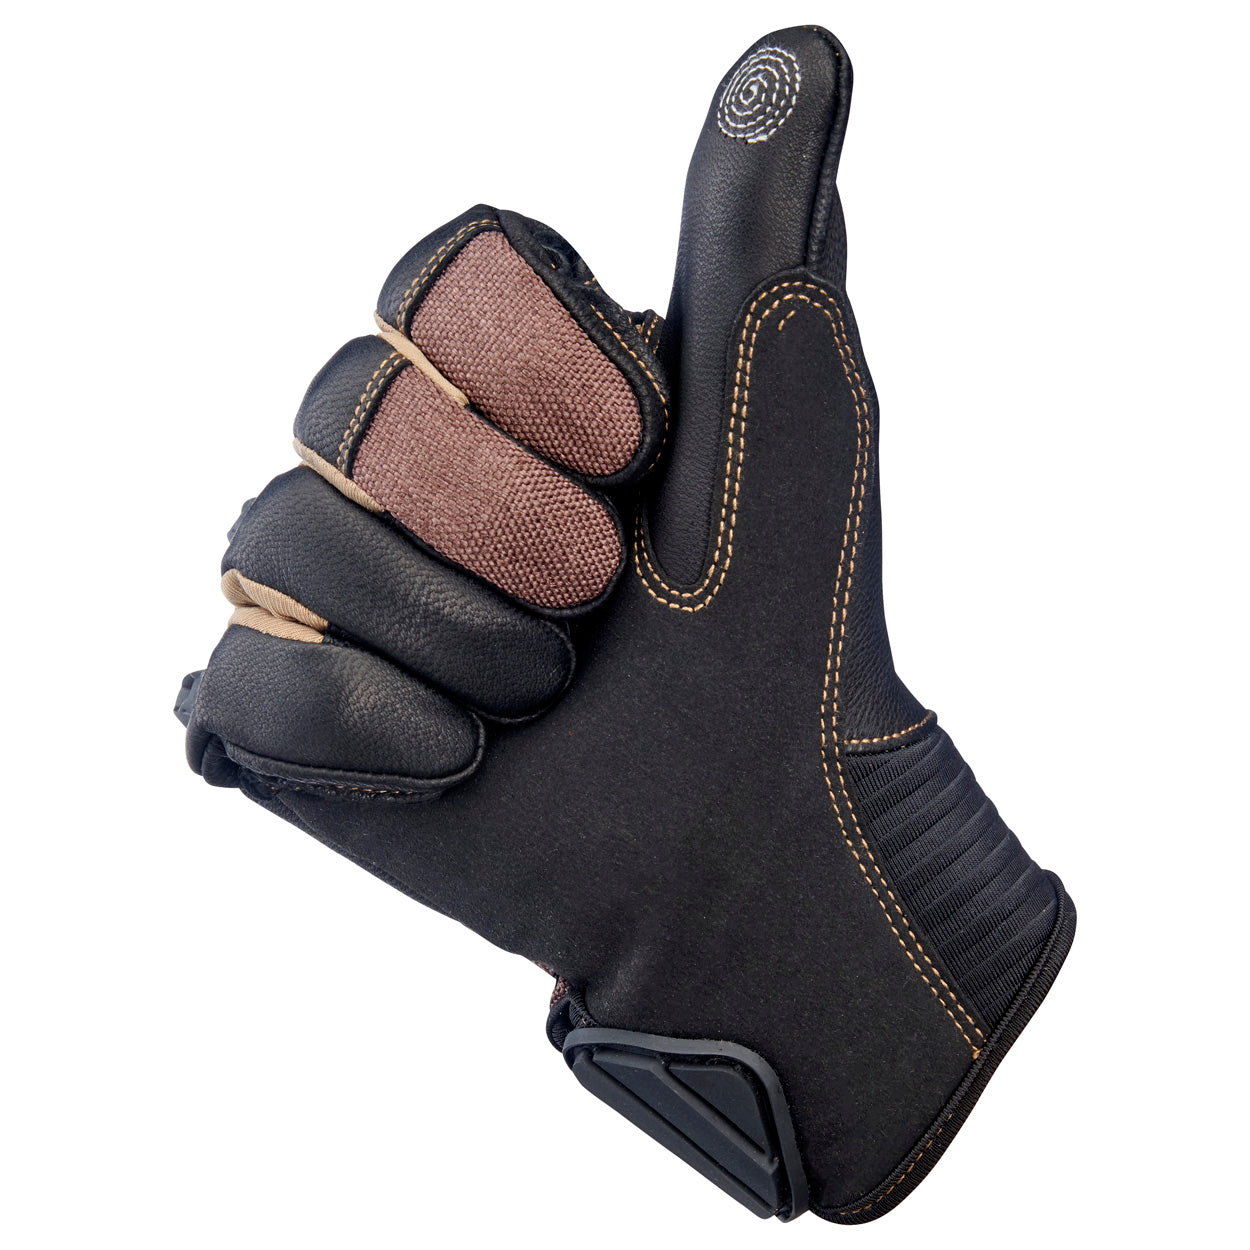 Bridgeport Gloves - Chocolate